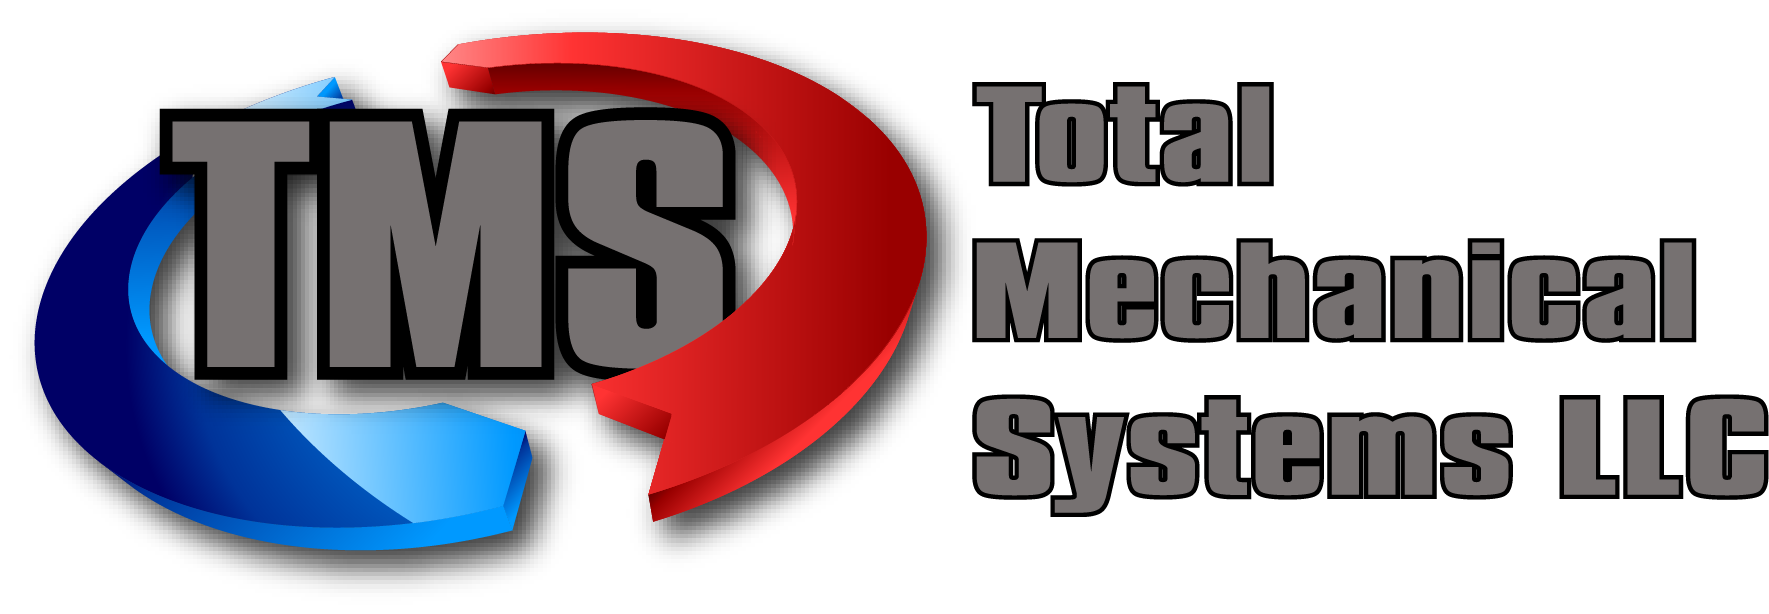 Total Mechanical Systems, LLC Logo